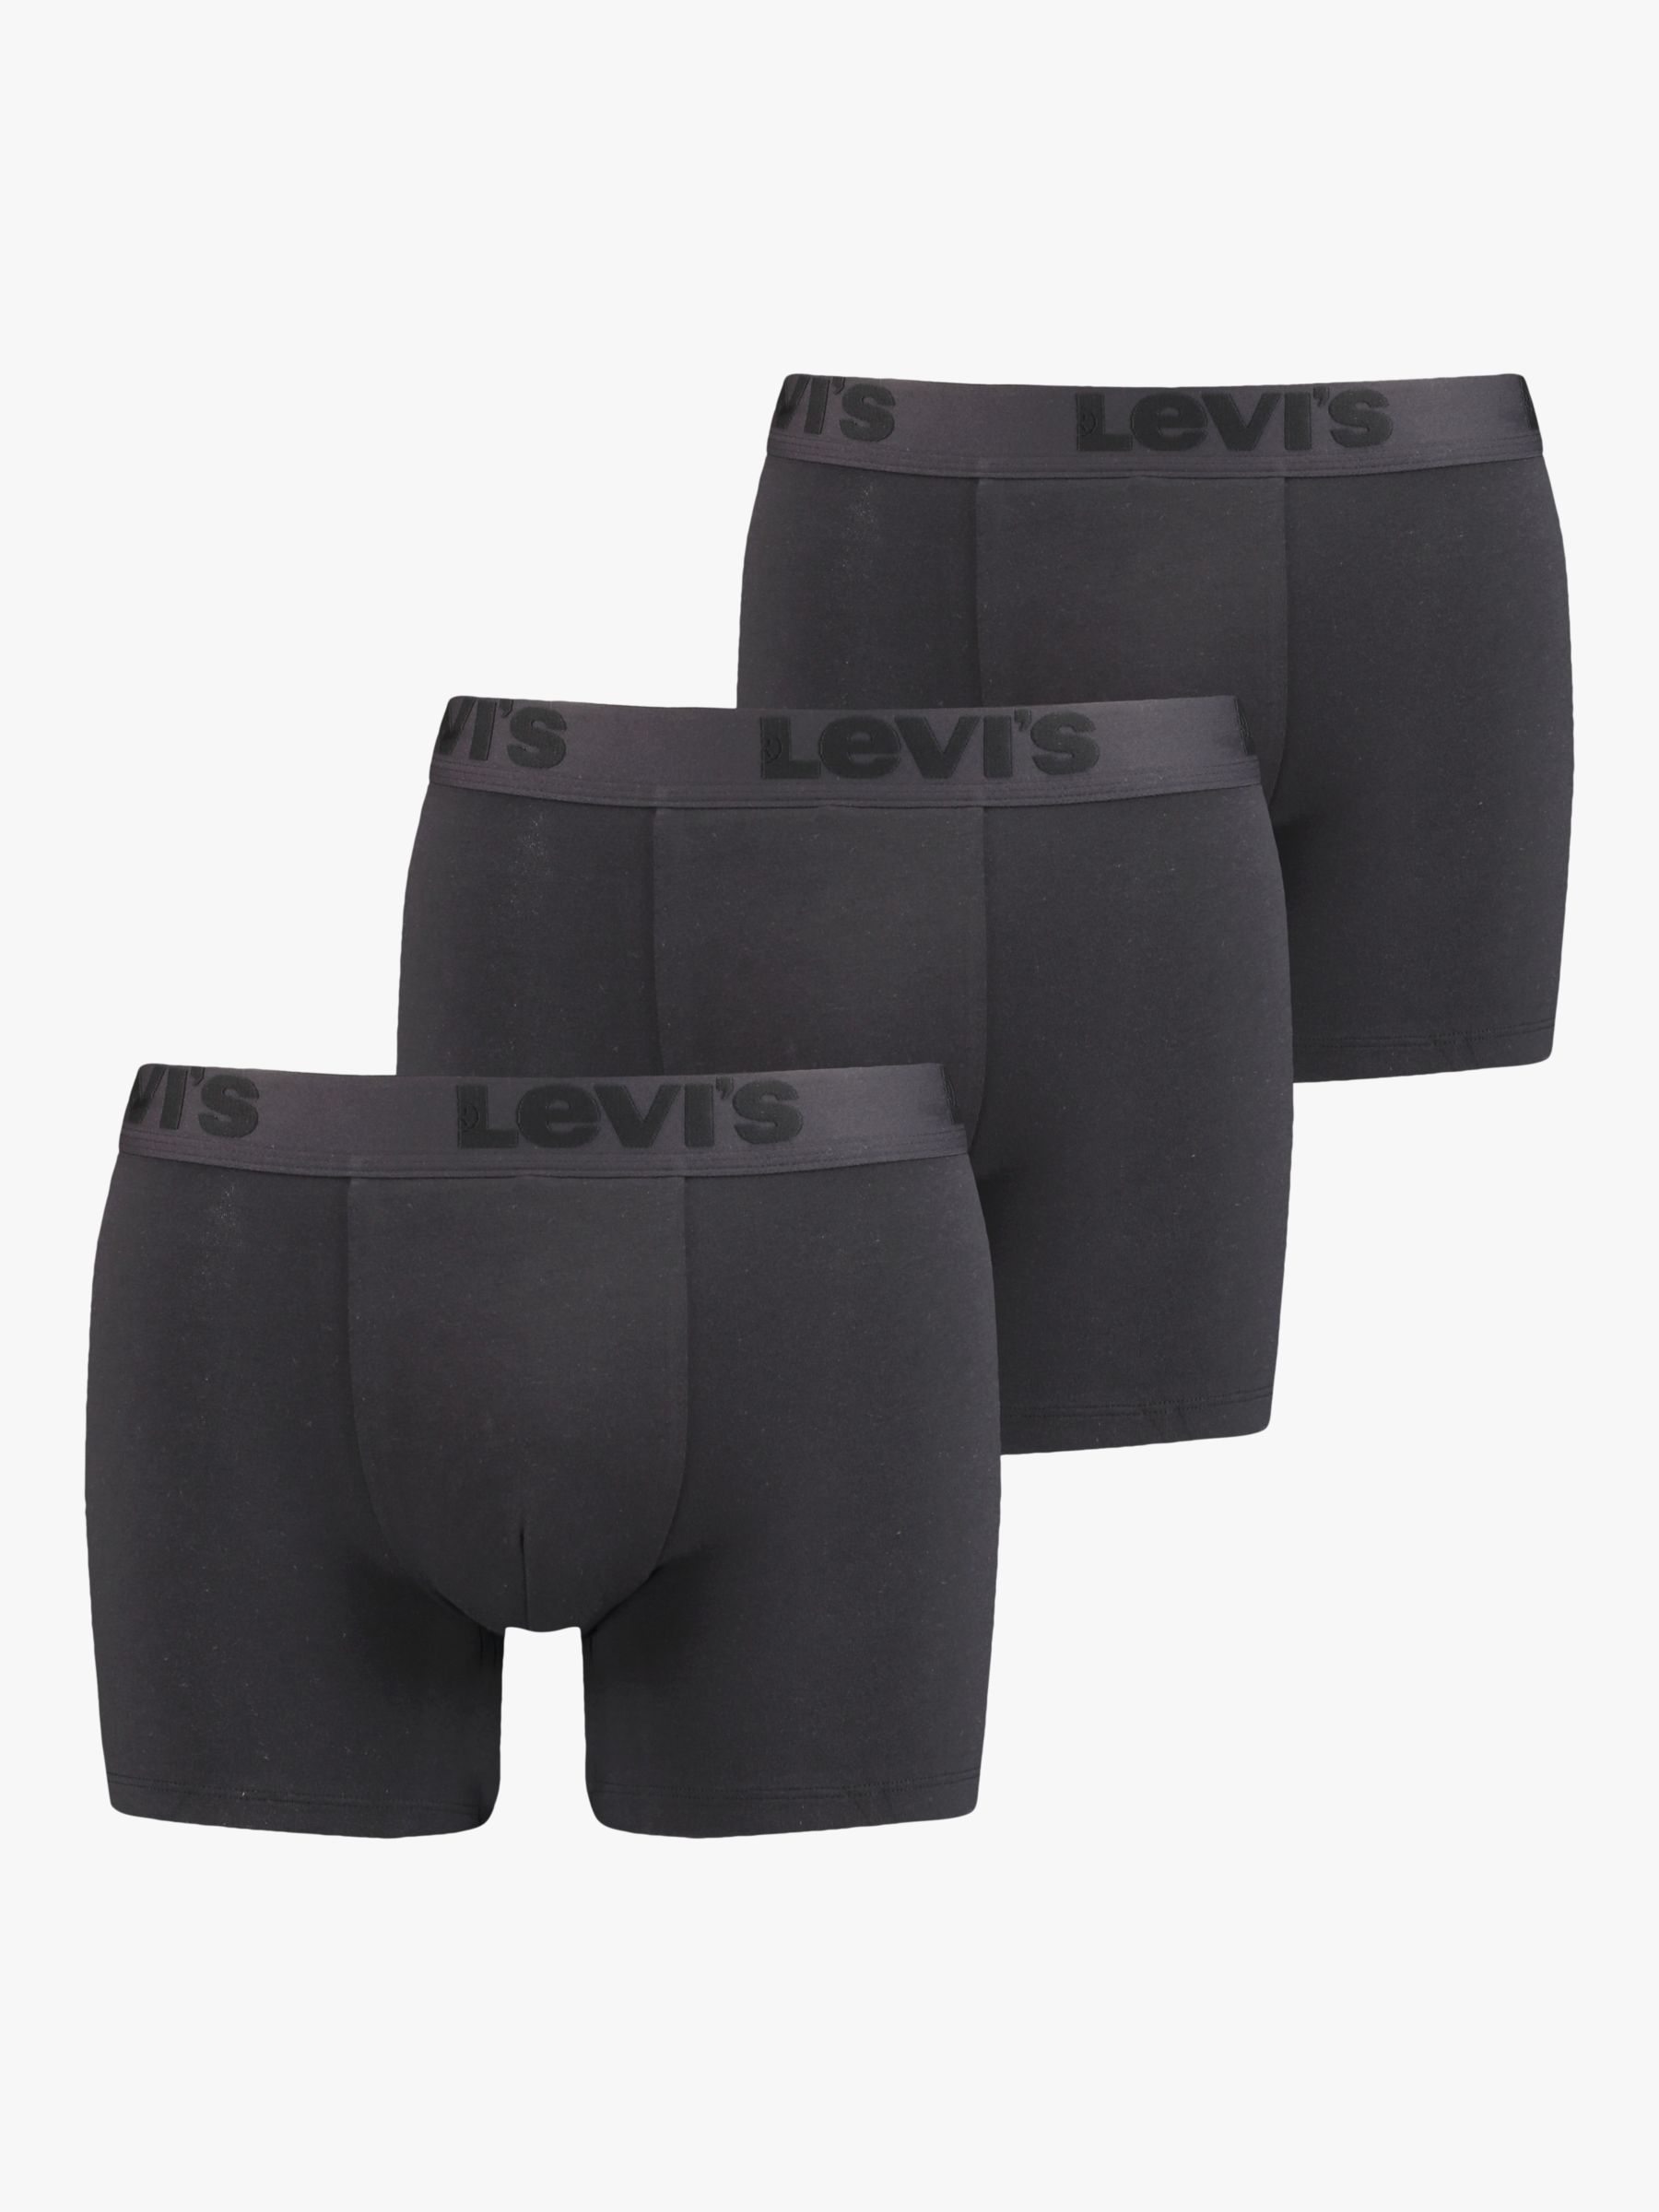 Levi's Premium Trunks, Pack of 3, Black at John Lewis & Partners